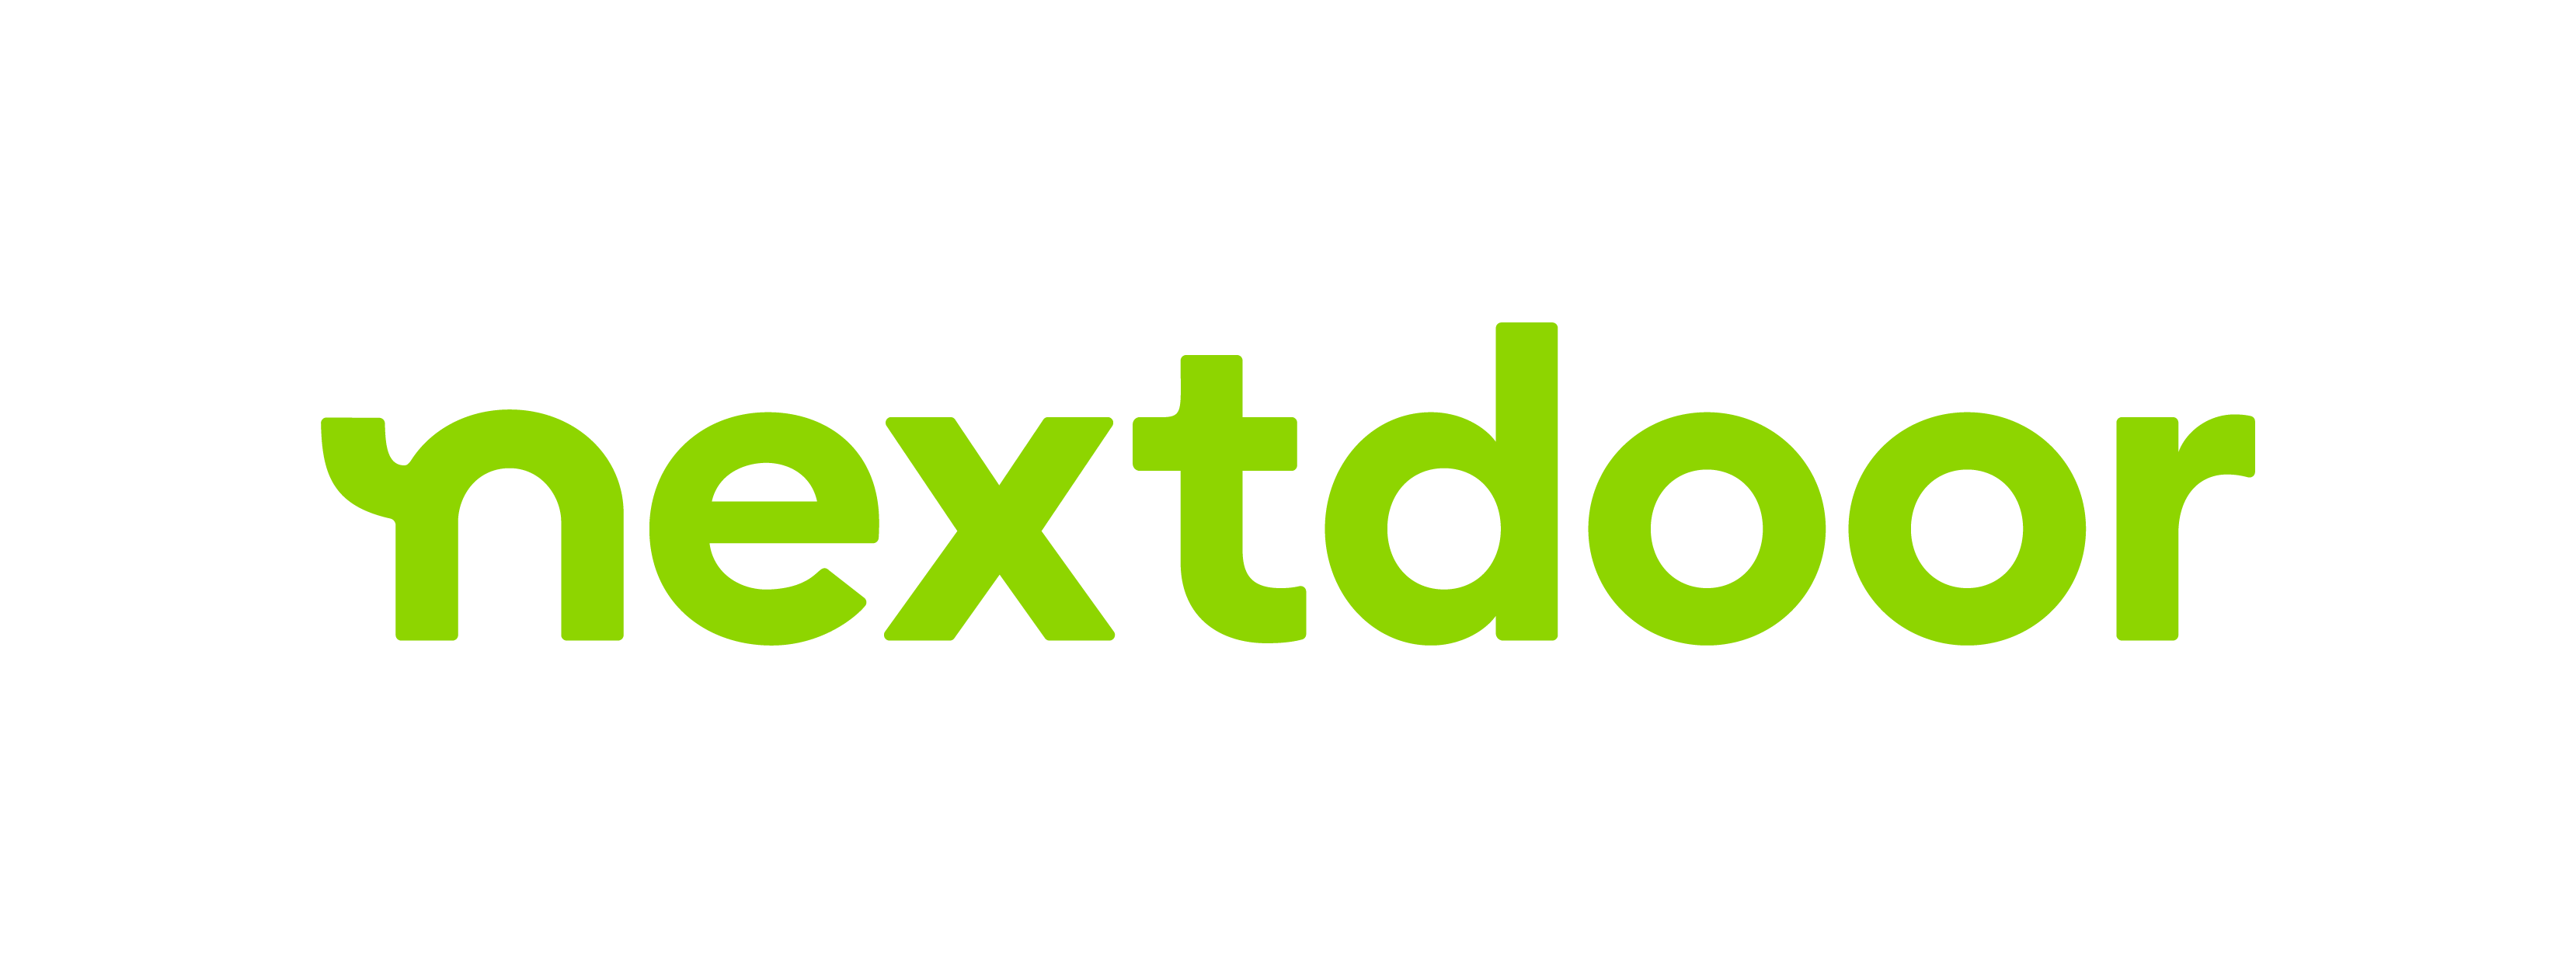 Nextdoorlogo Green